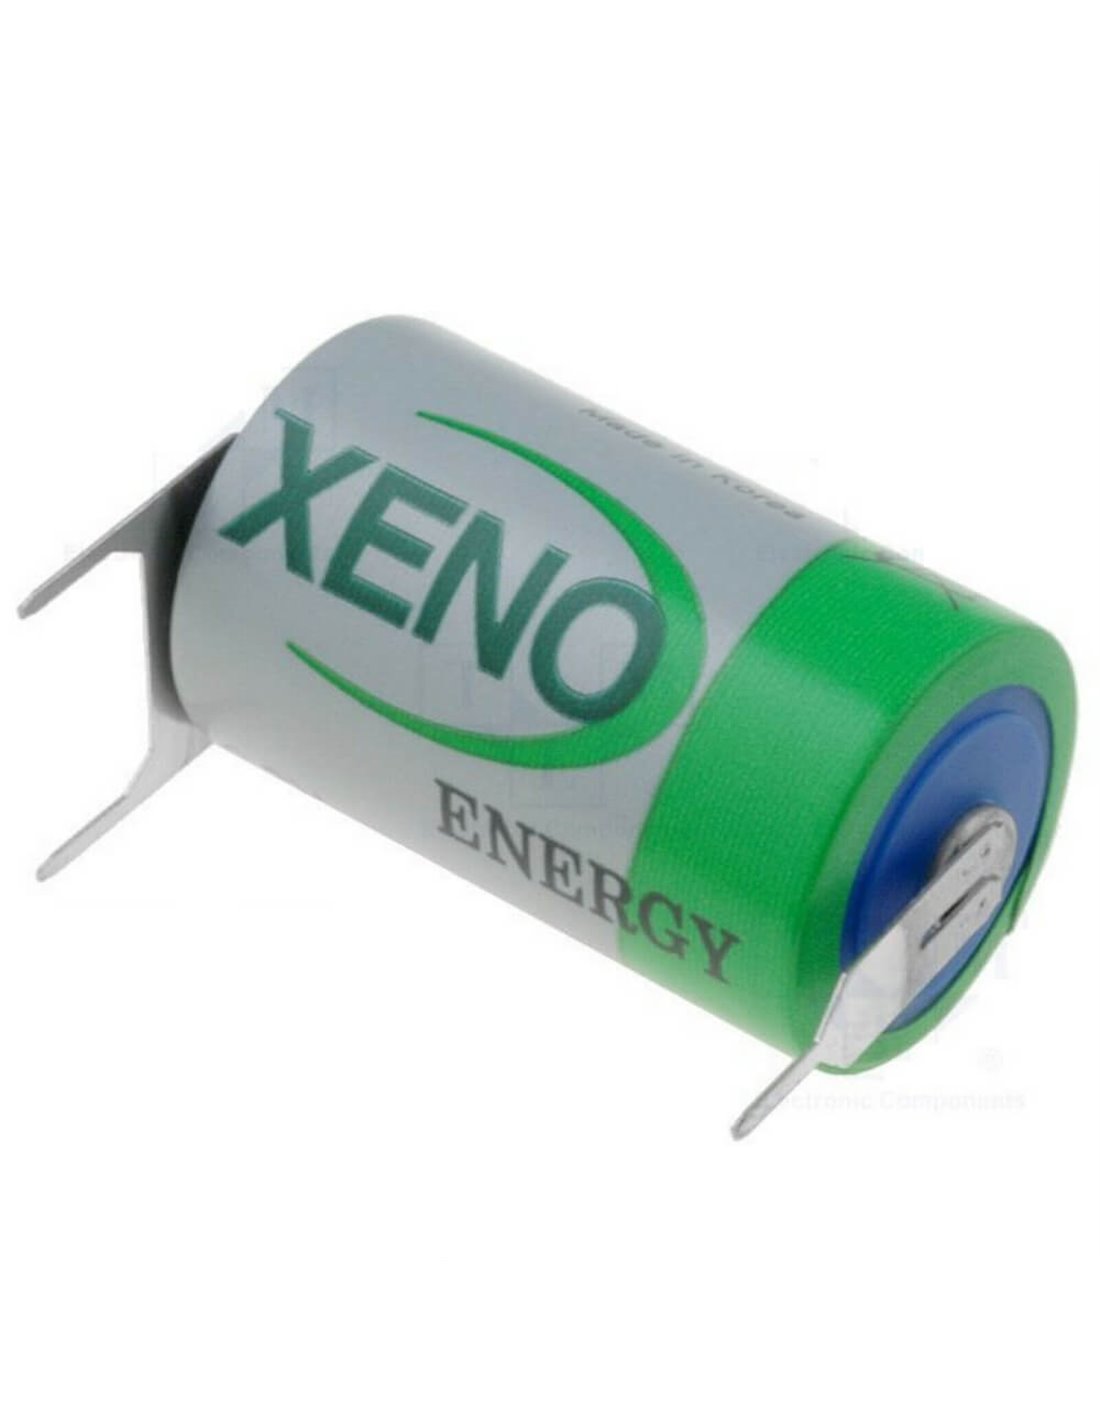 Xeno XL-050F Battery, 3.6V 1/2 AA Lithium Battery (ER14250) 3.6V